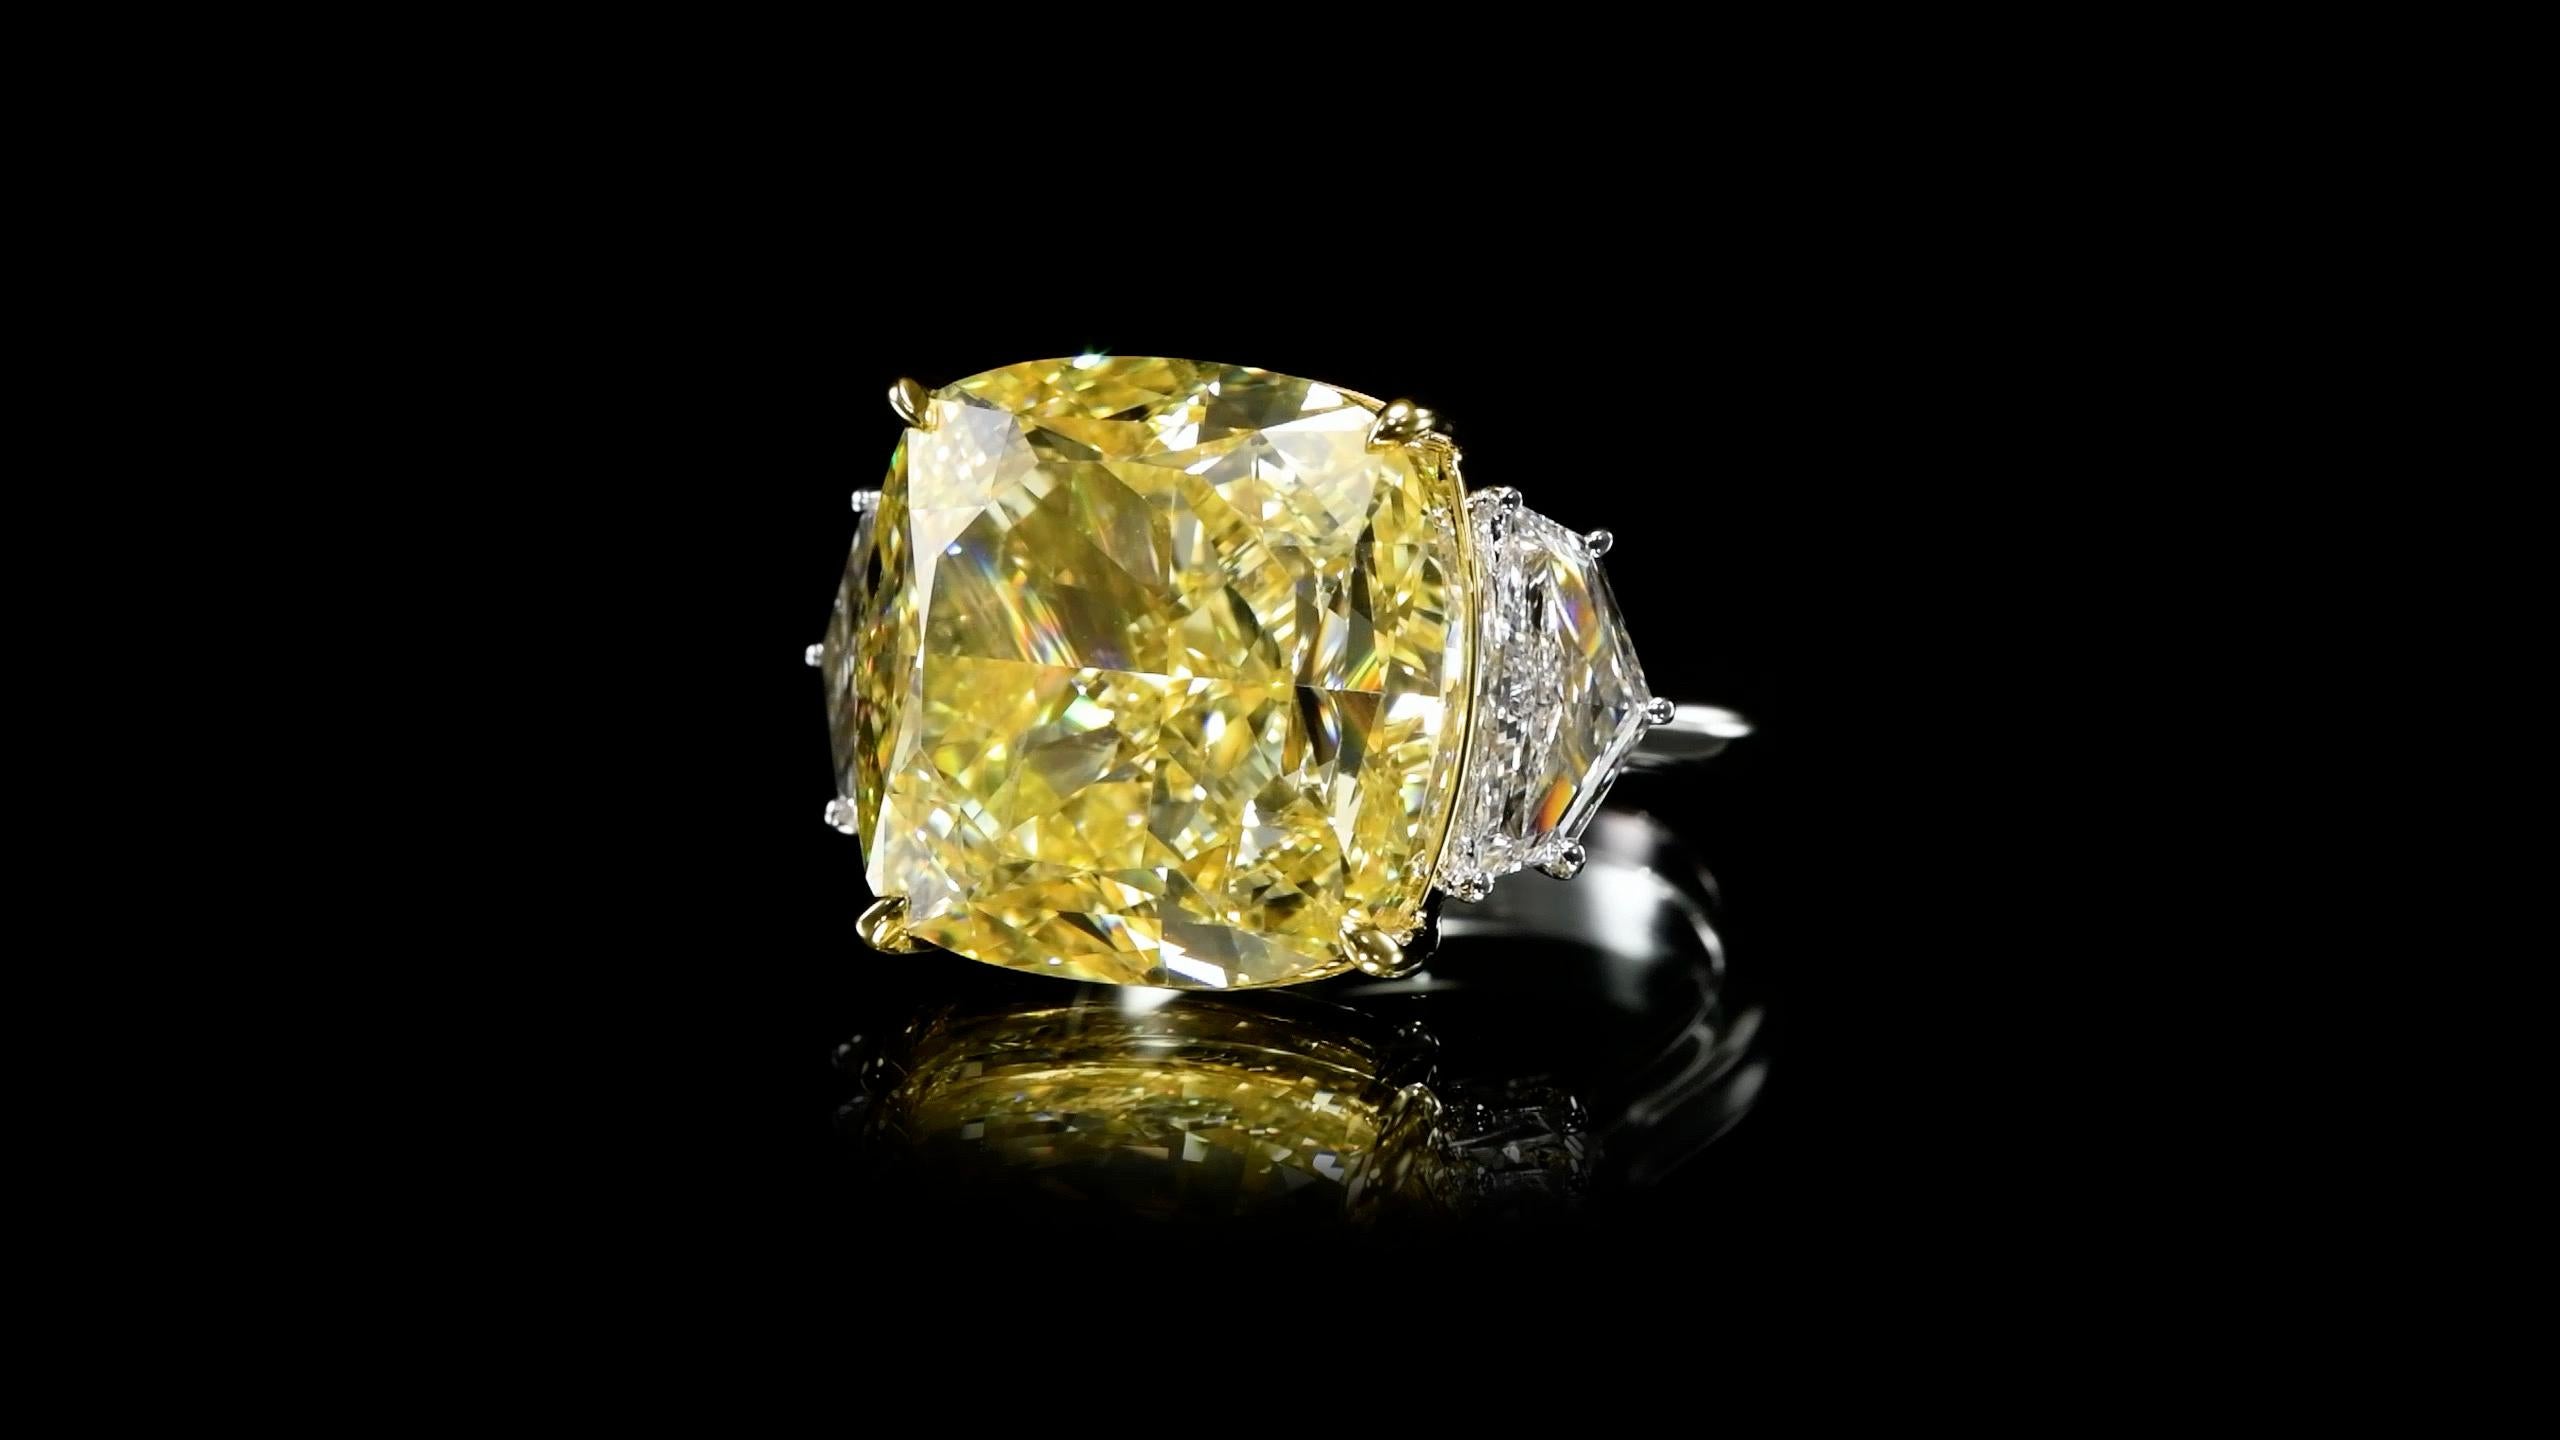 Cushion Cut Emilio Jewelry Gia Certified 28.00 Carat Intense Yellow Flawless Diamond Ring For Sale